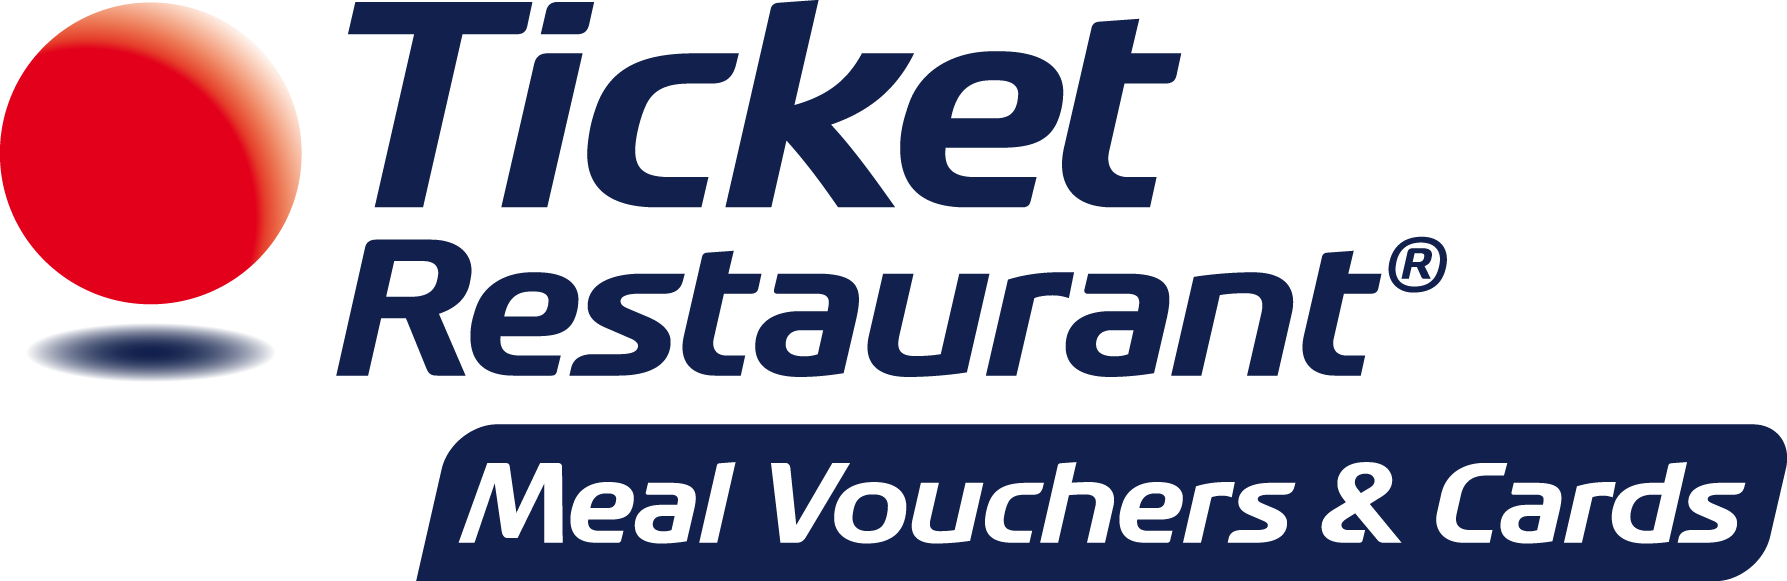 Ticket Restaurant Meal Vouchers Cards Logo PNG